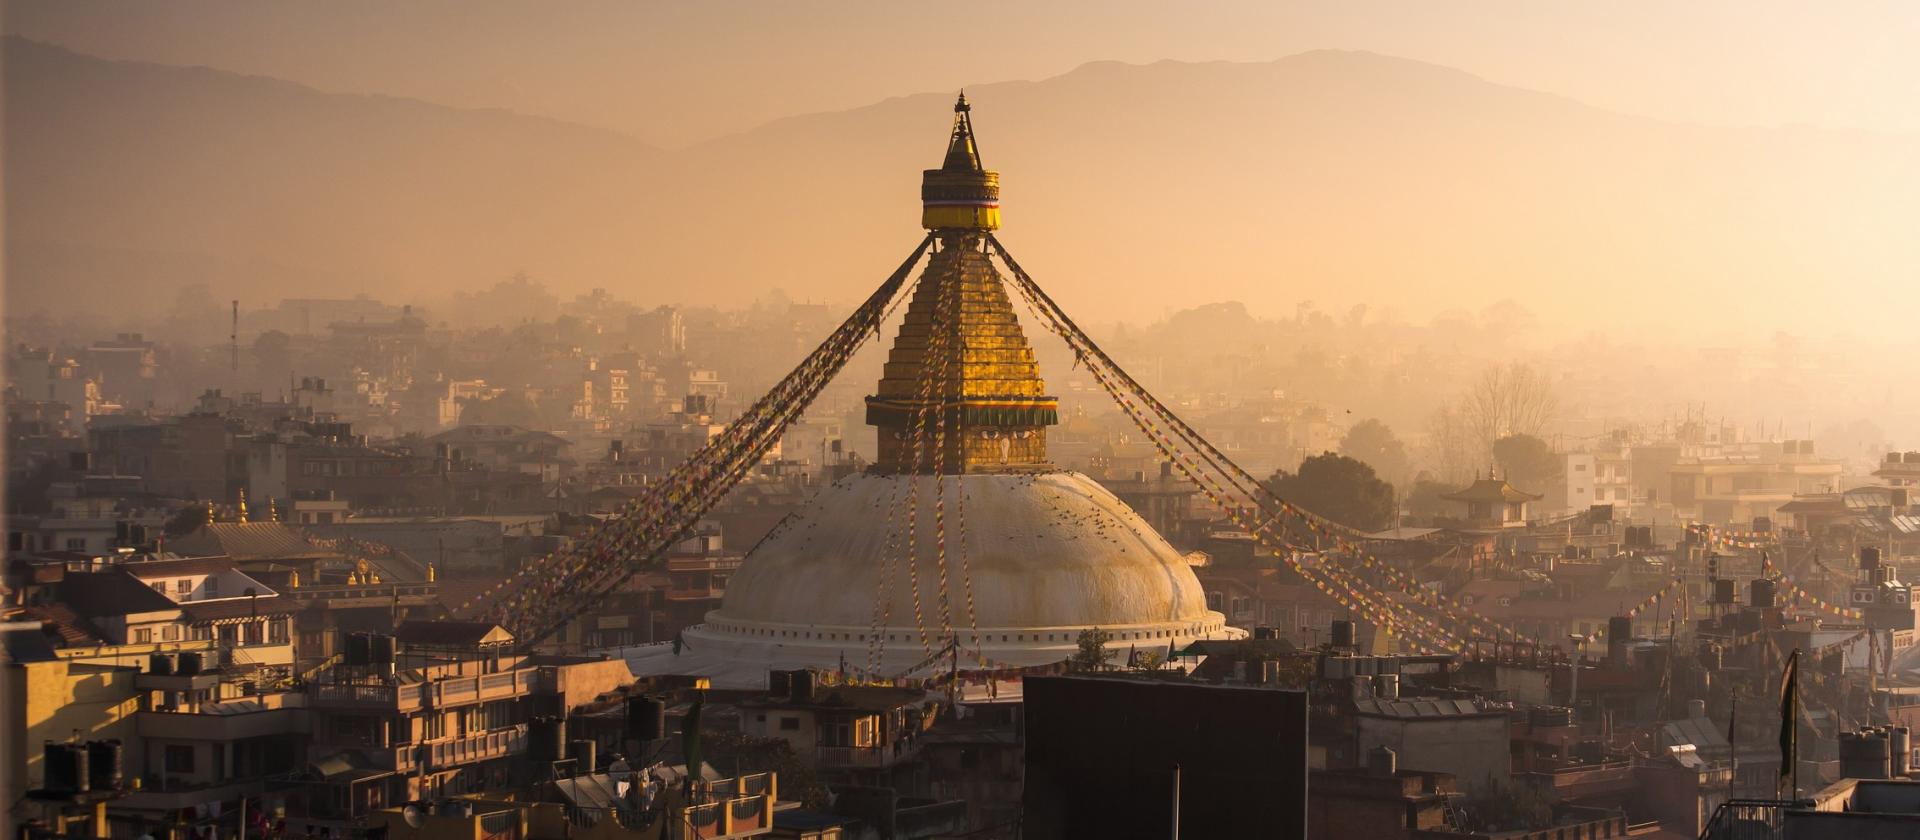 Widok na stolicę kraju Kathmandu